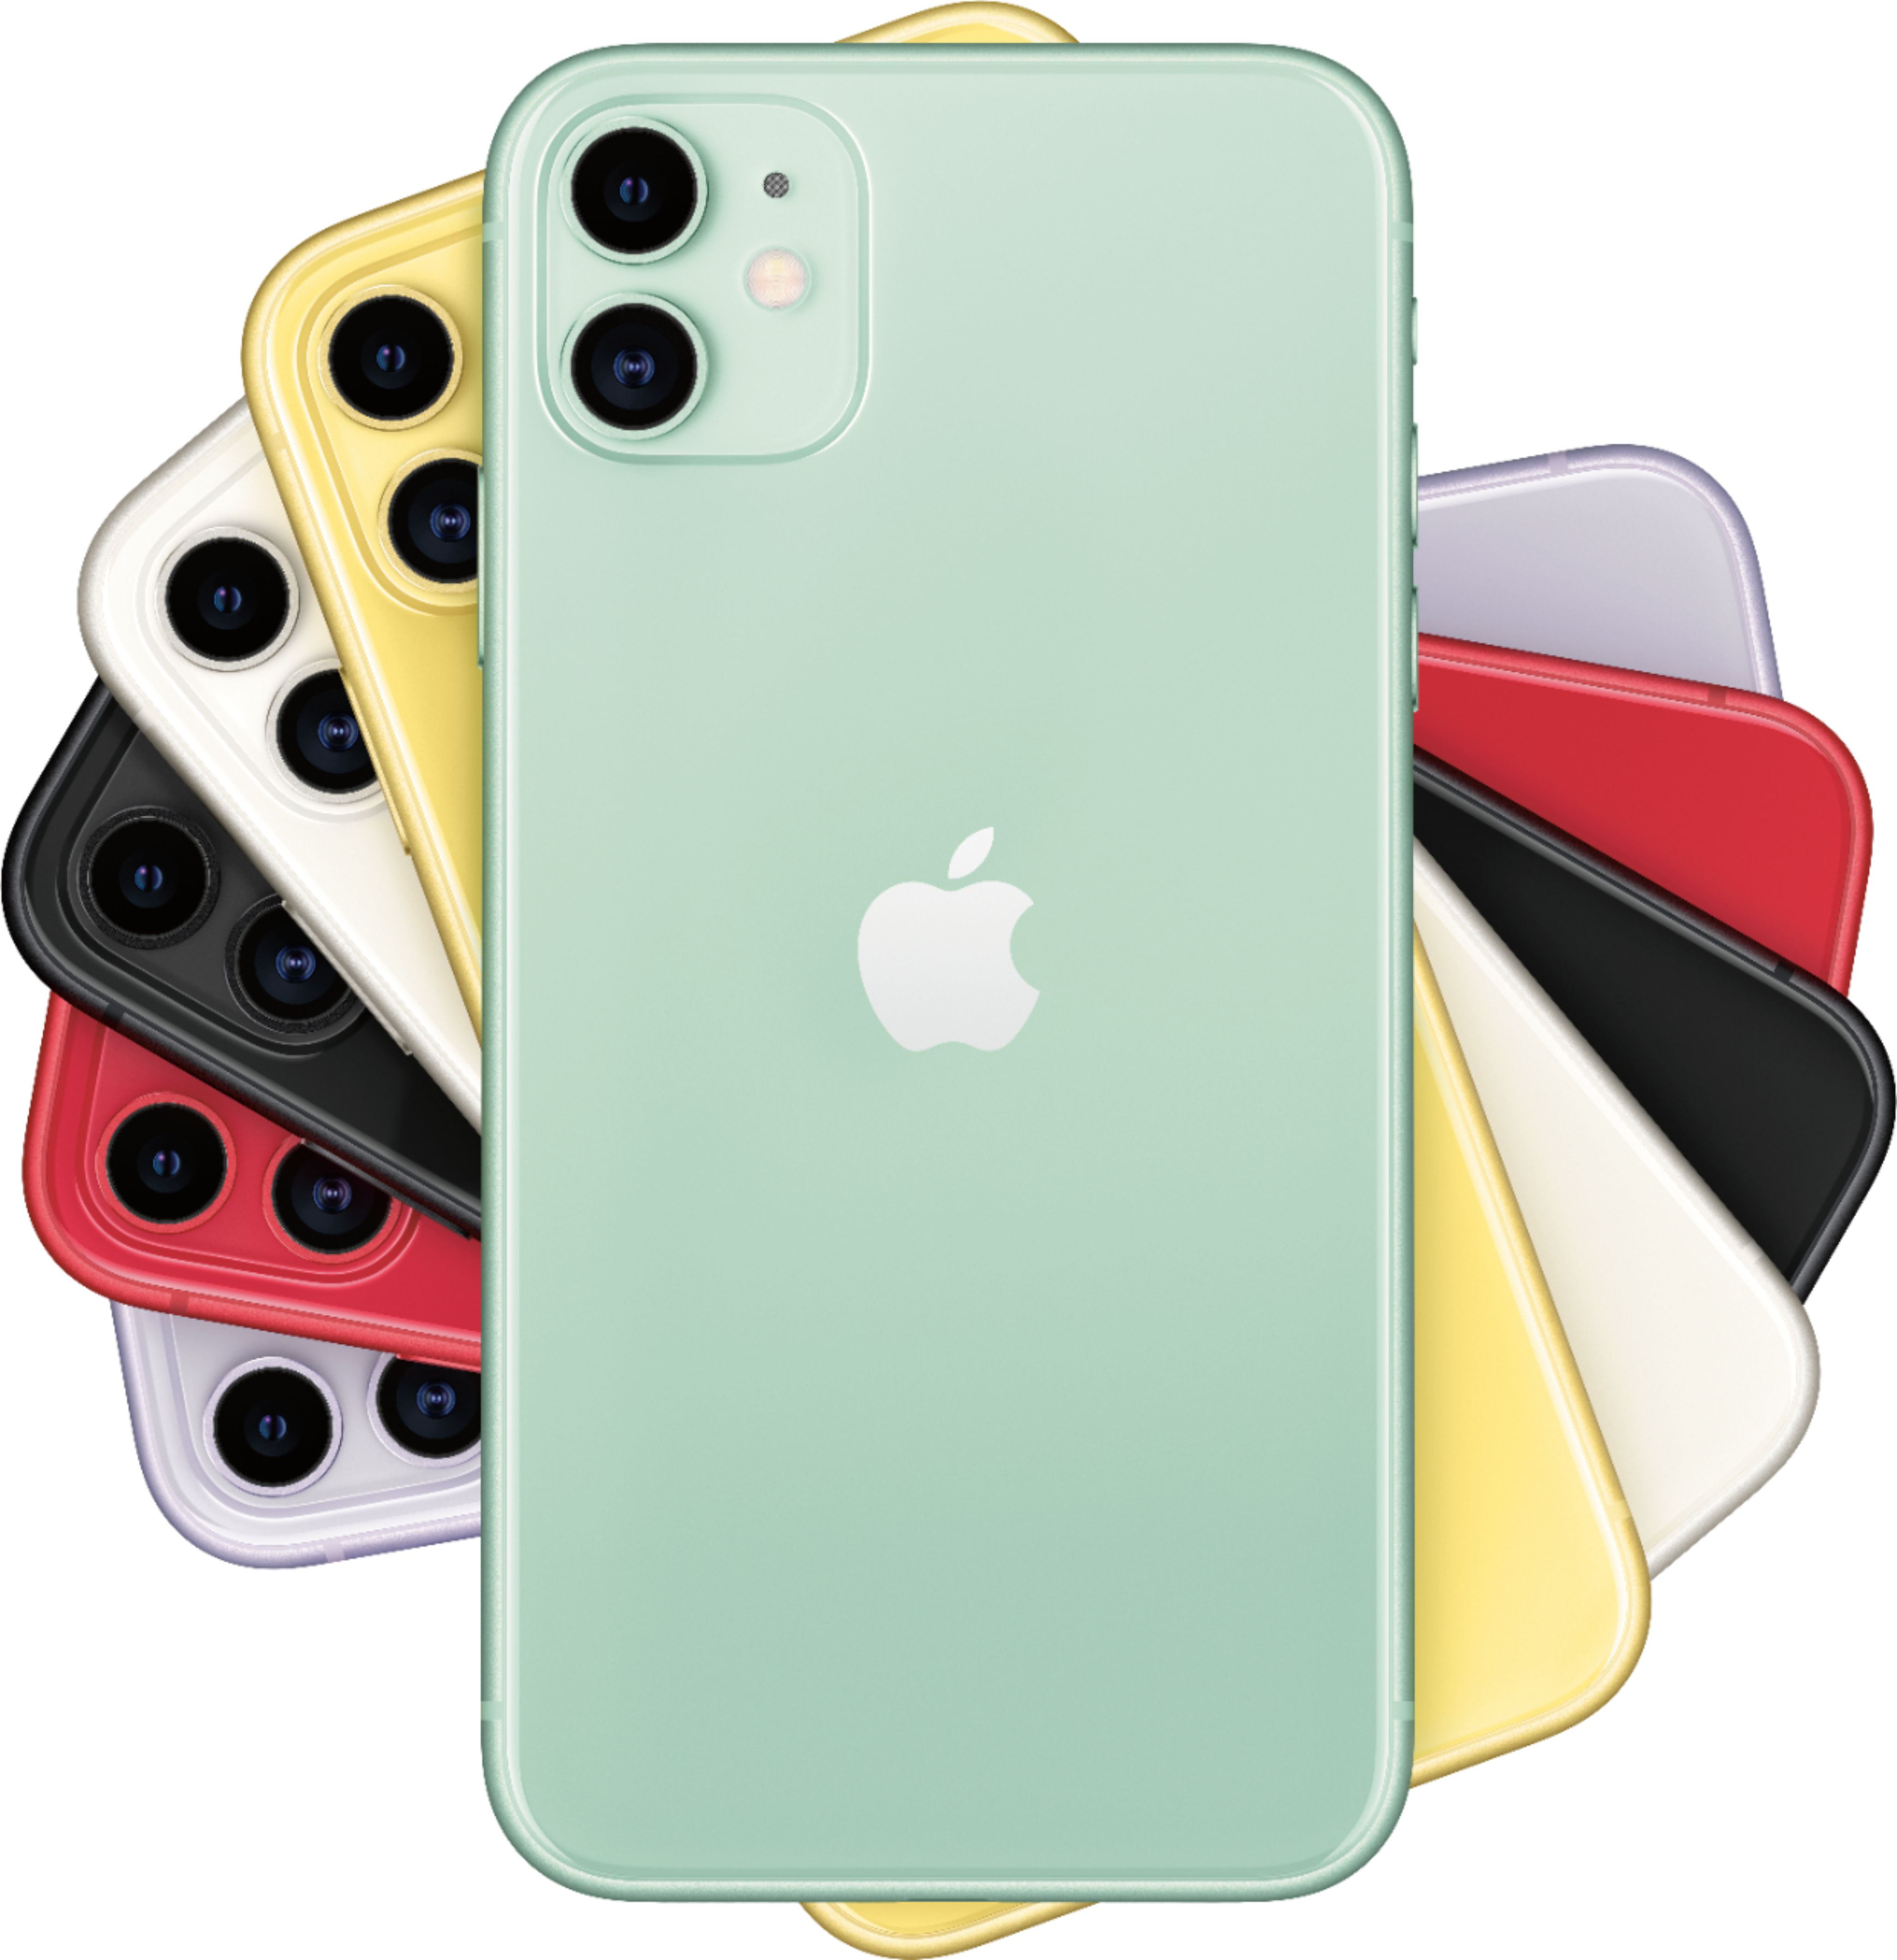 Apple iPhone 11 64GB Green (Verizon) MWLD2LL/A - Best Buy